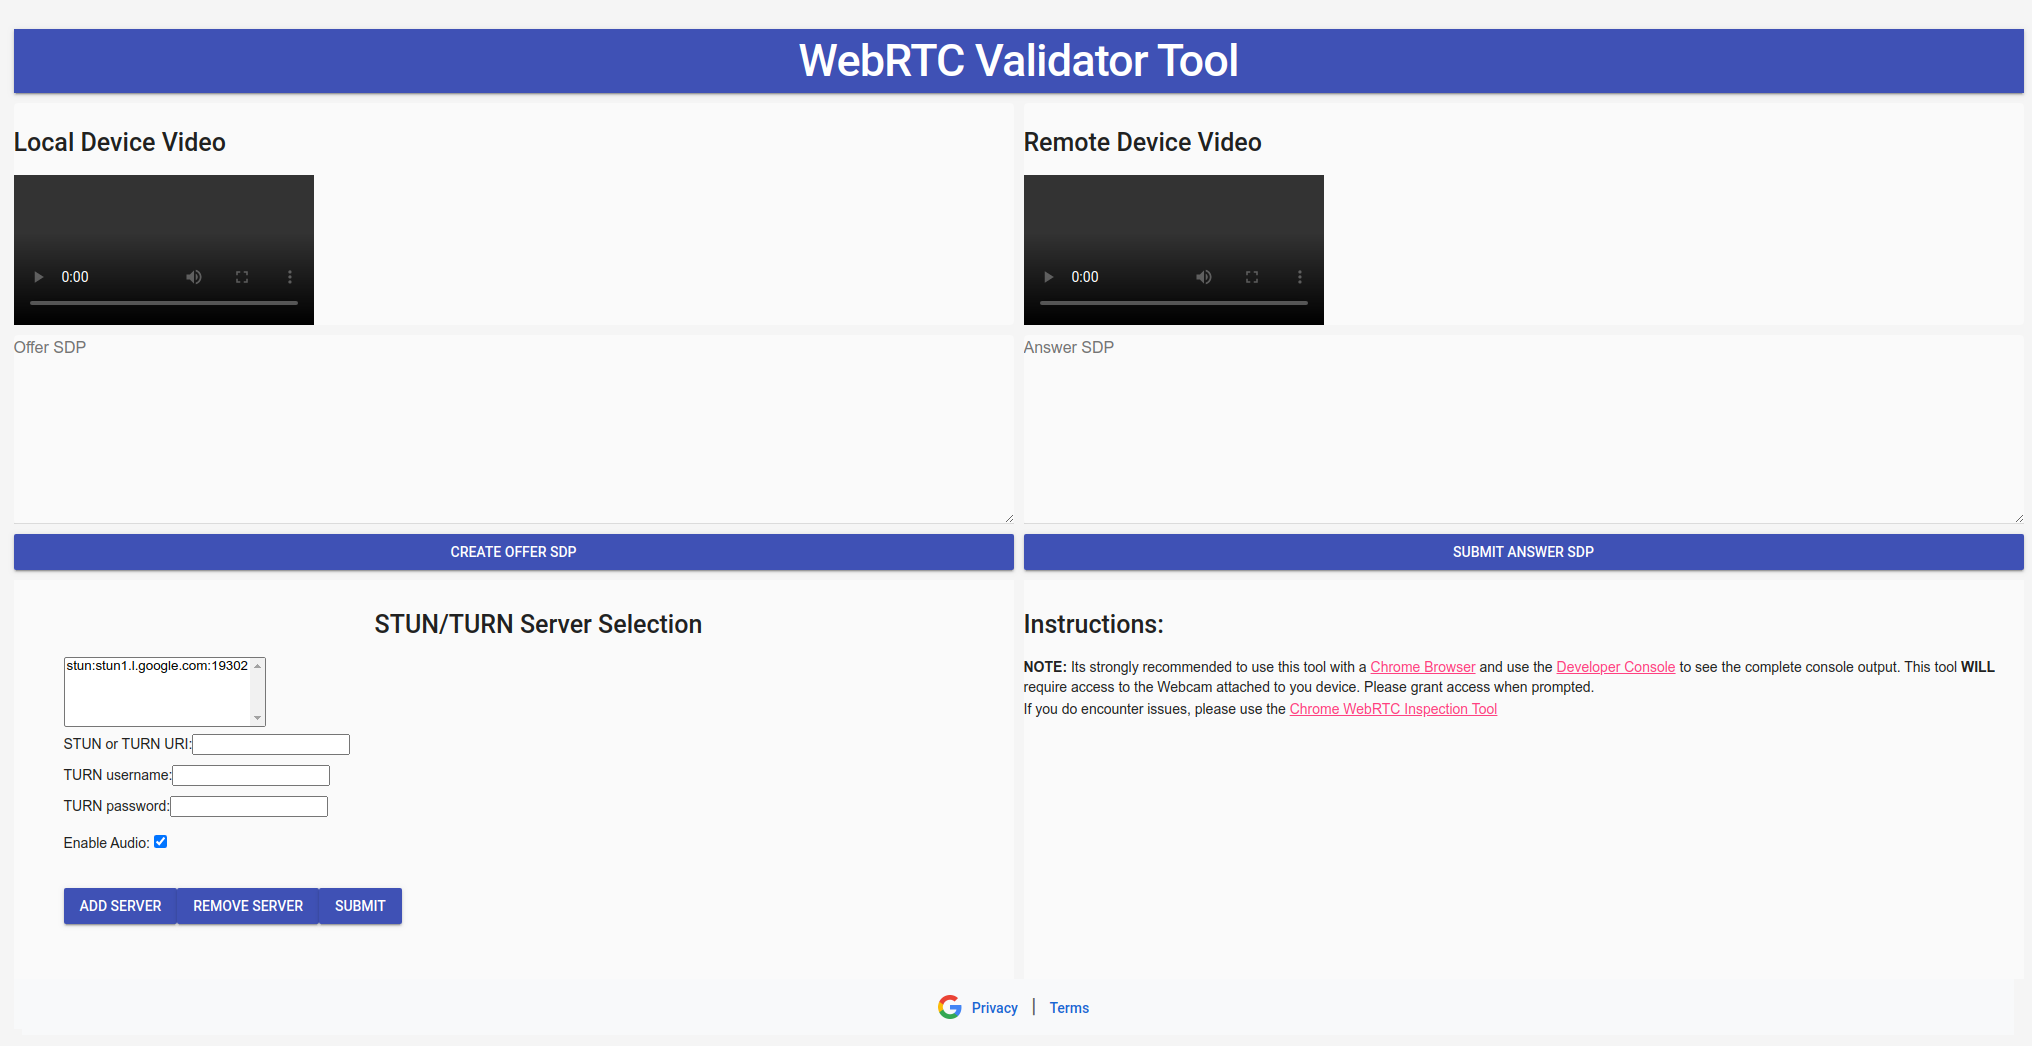 Overview image of WebRTC Validator Tool.